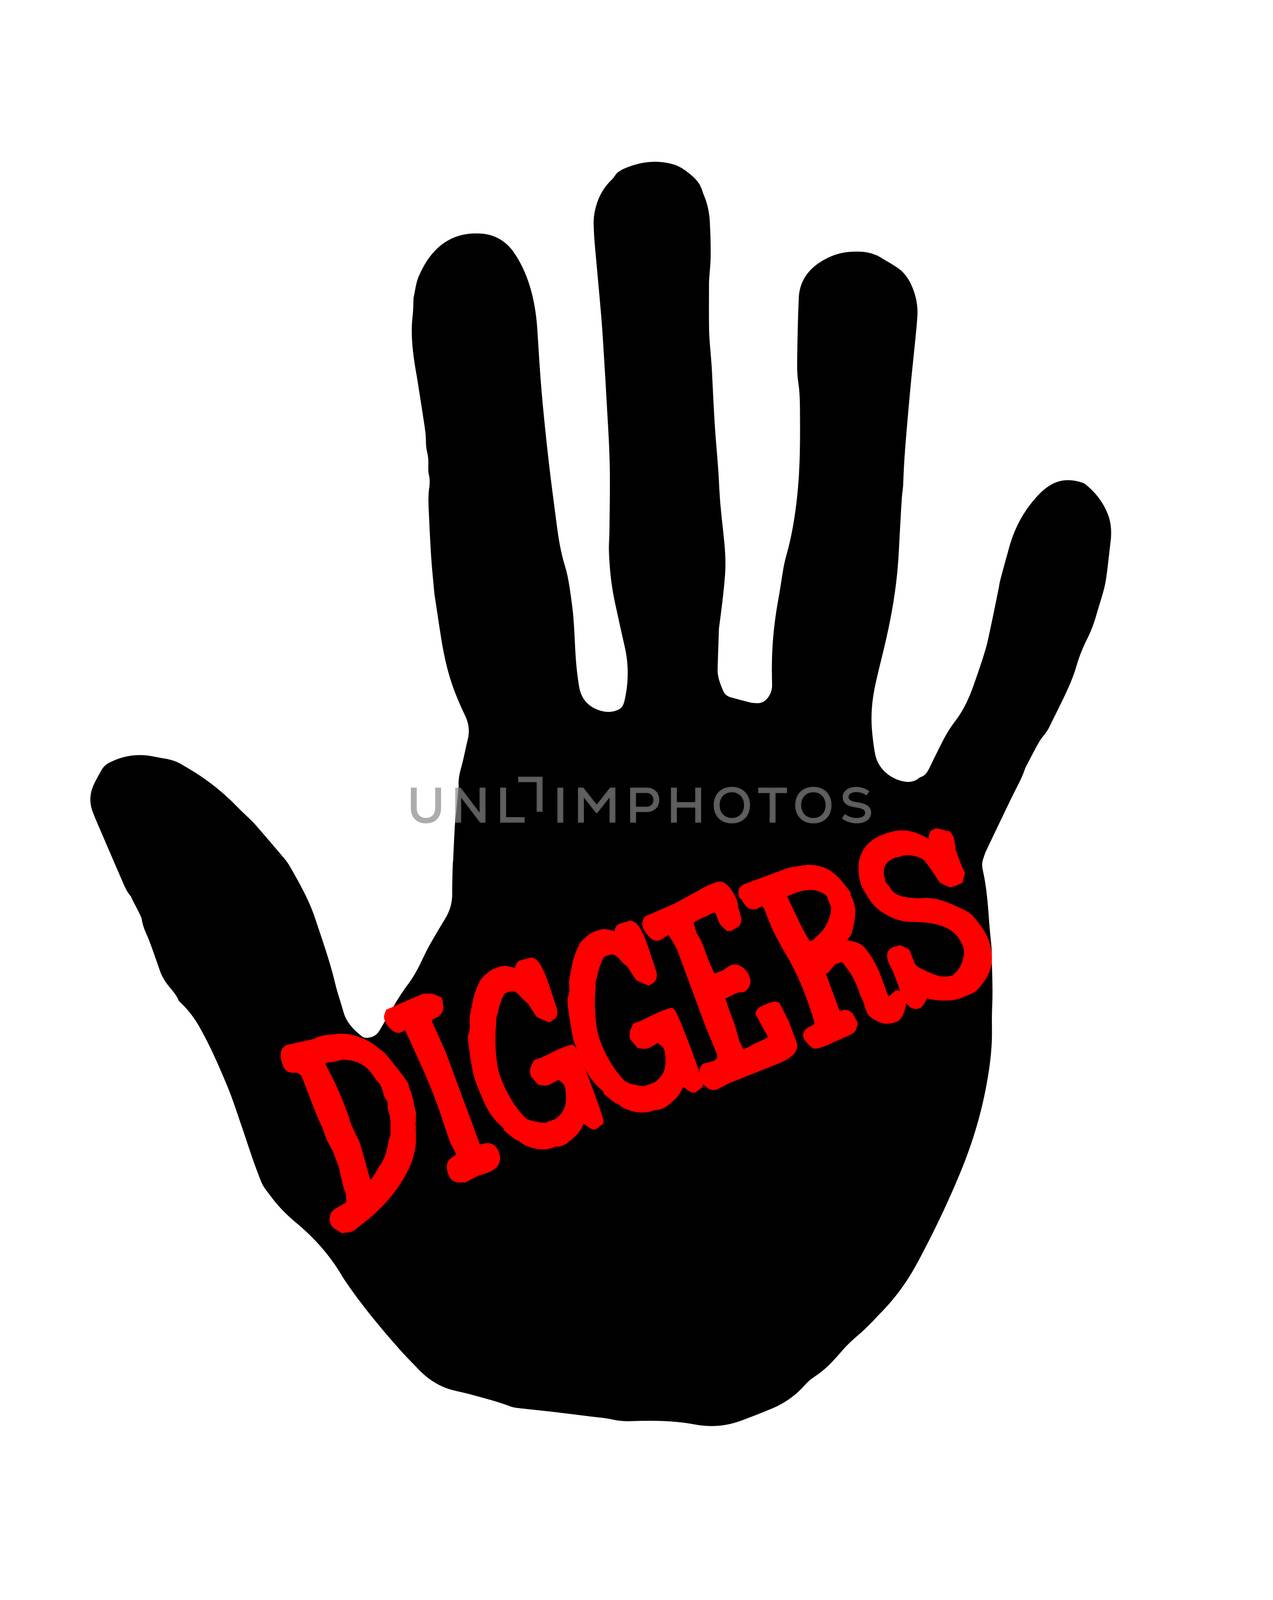 Handprint diggers by Milovan